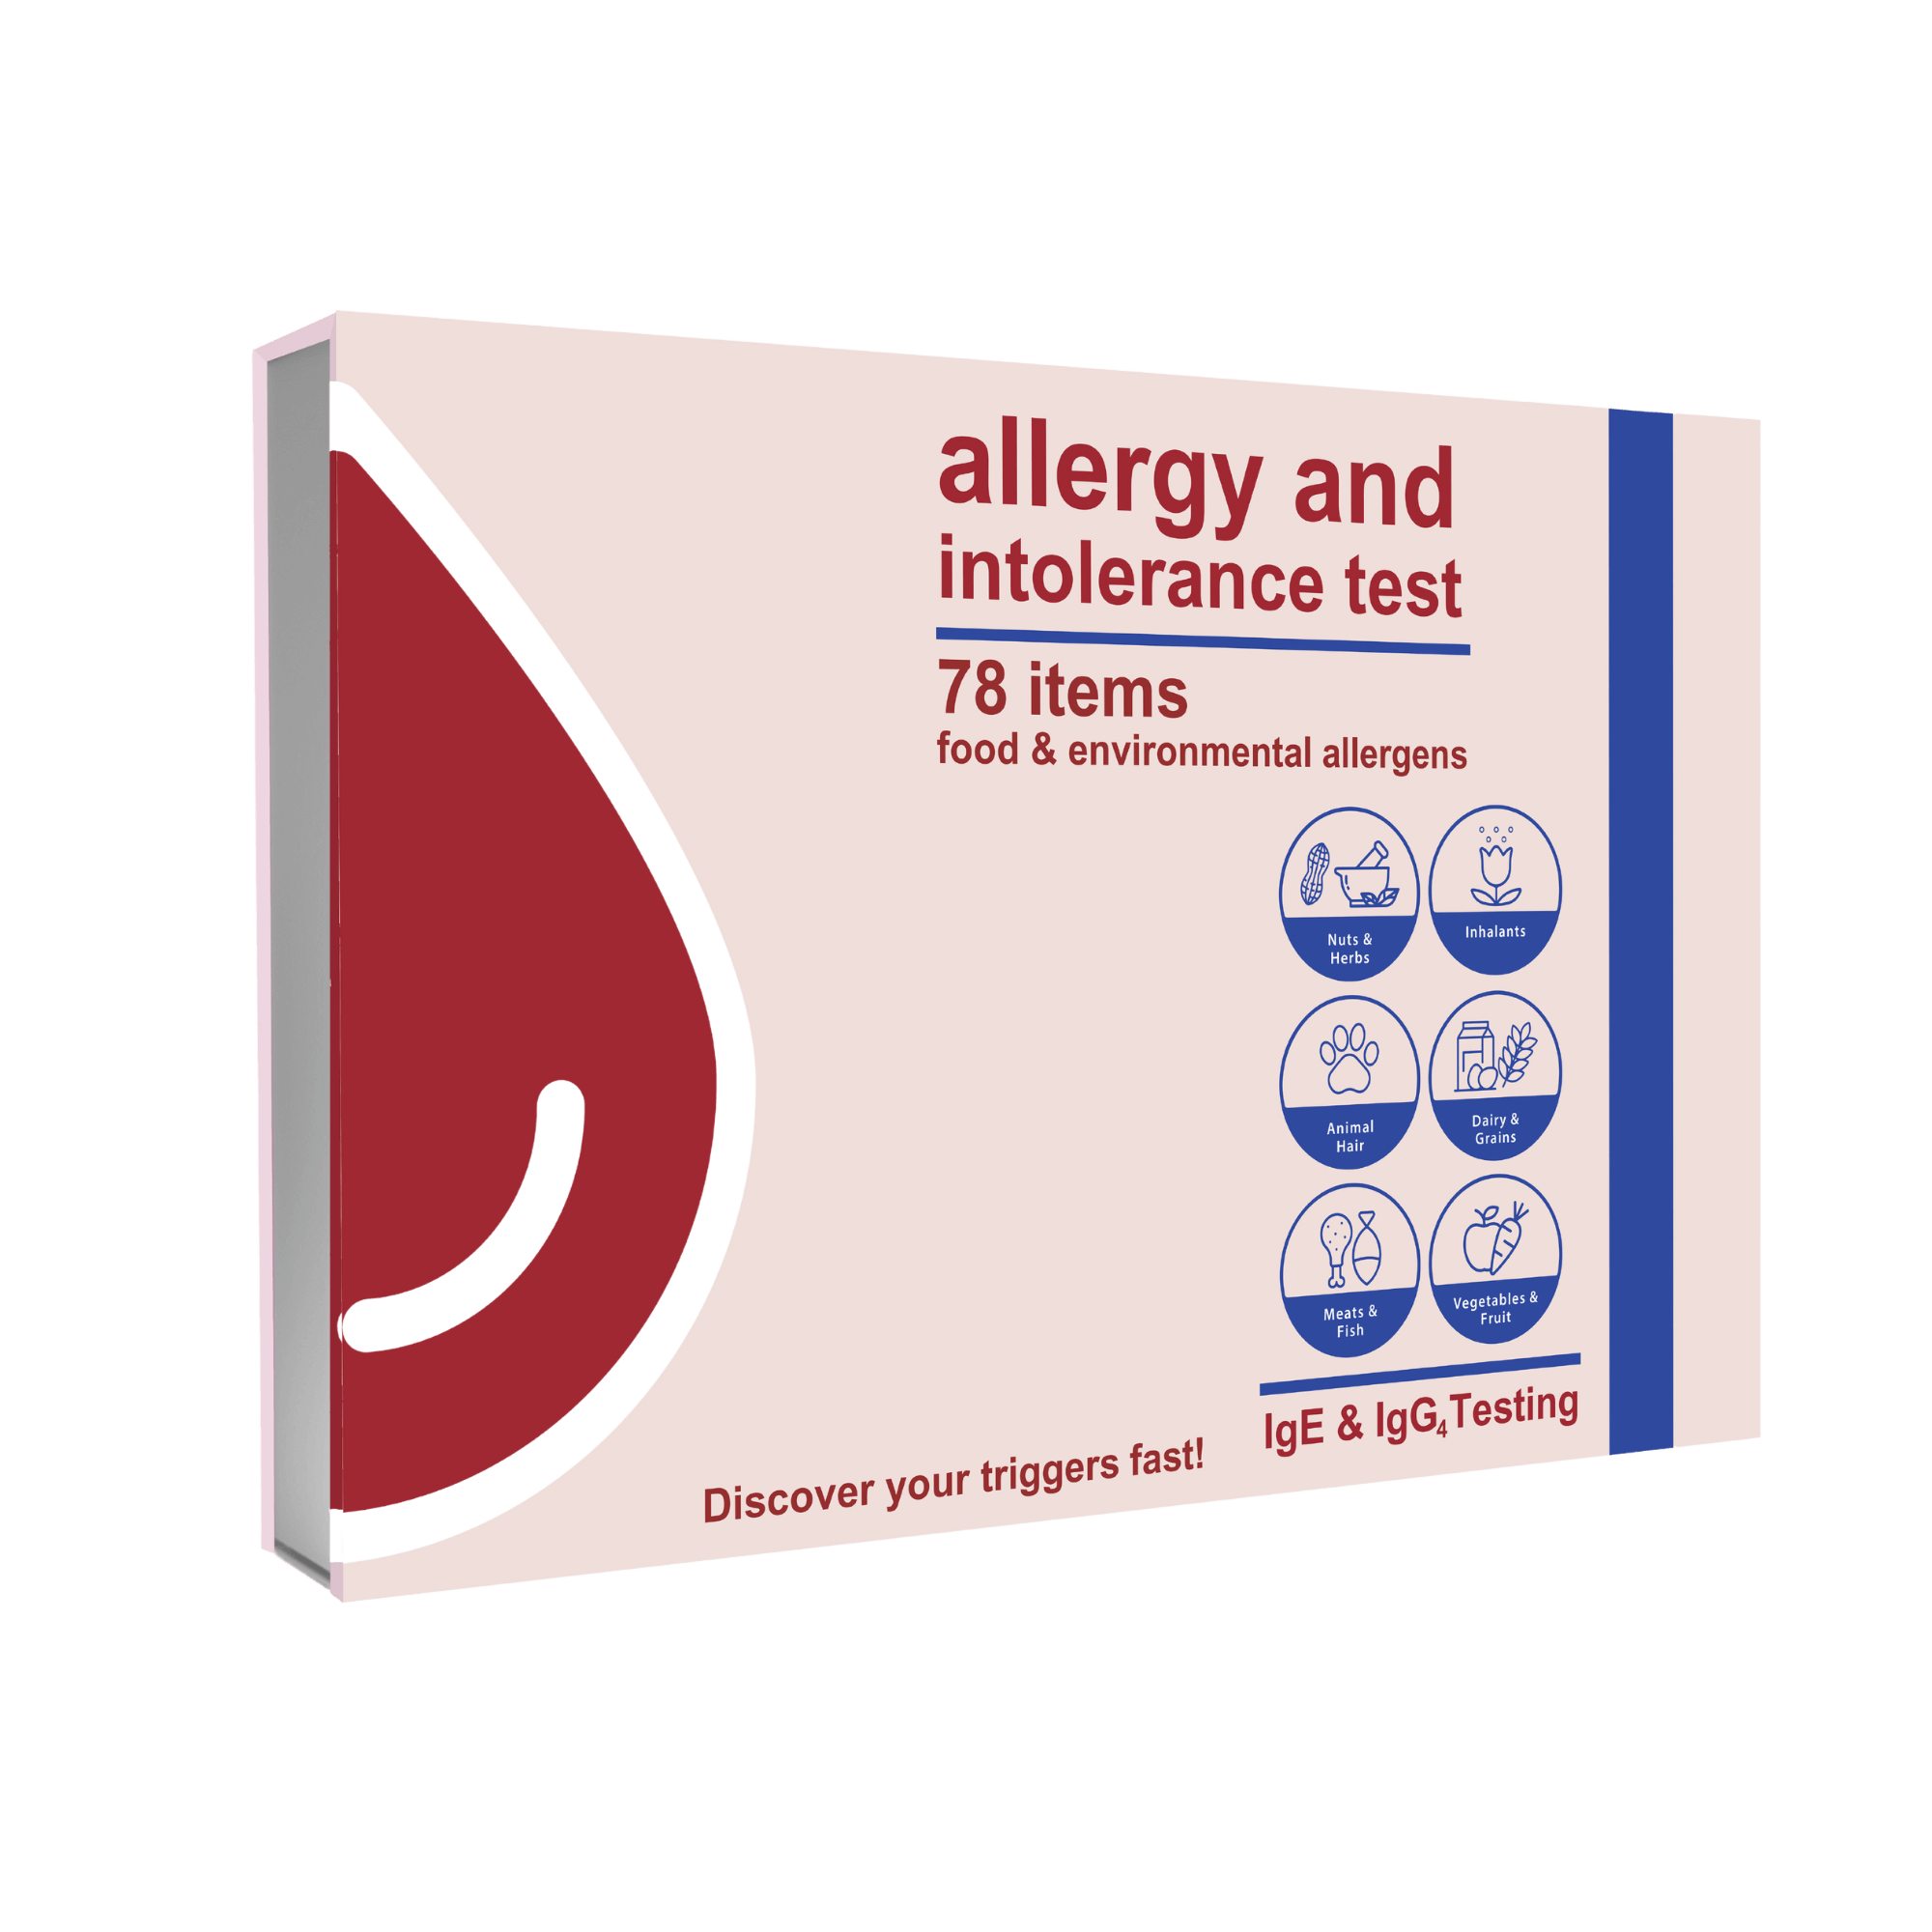 allergy intolerance test - Deciding on an Allergy or Intolerance test